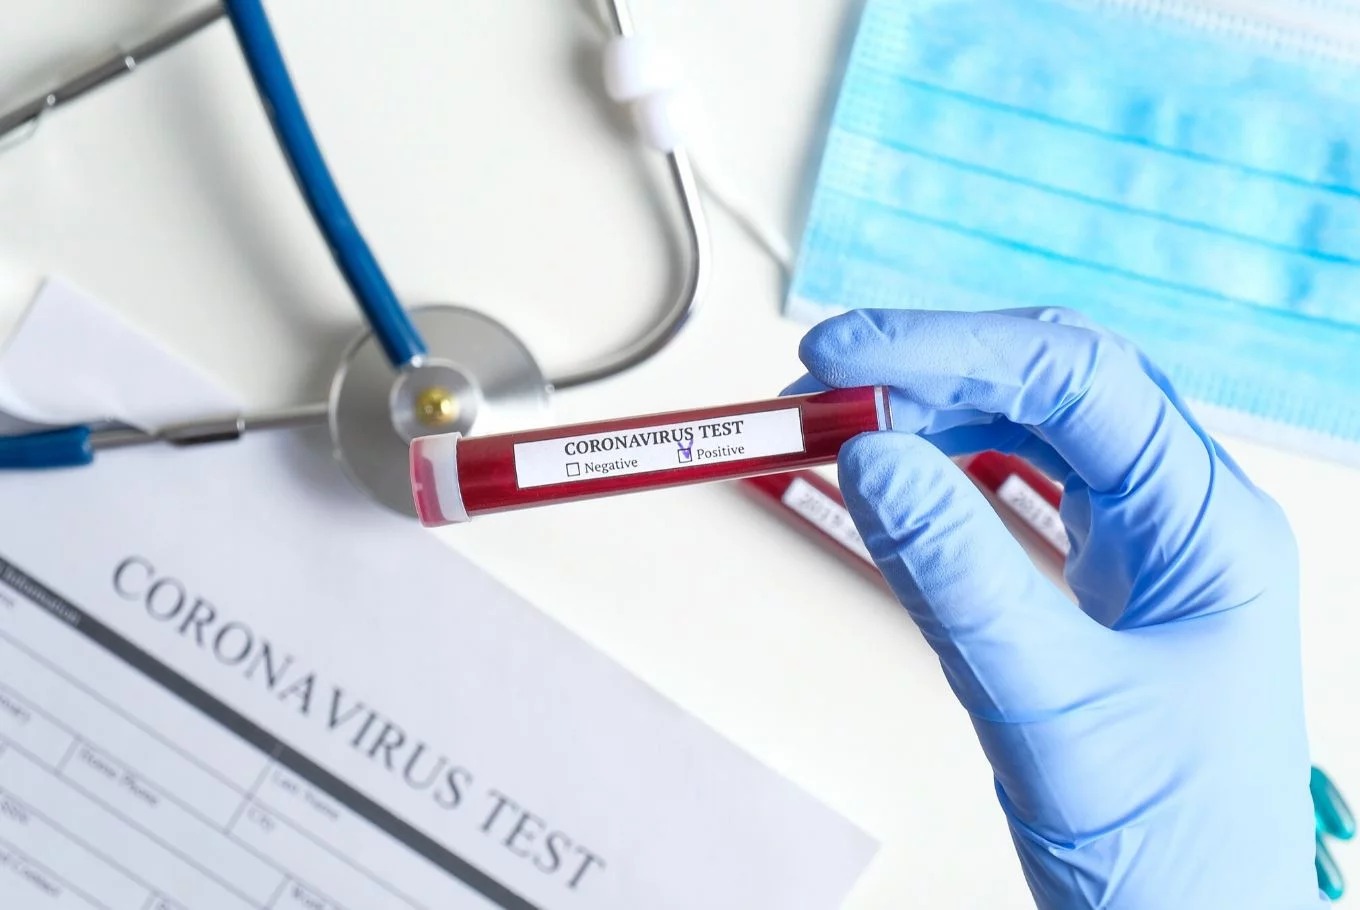 MP in Tanzania Tests Positive for Coronavirus